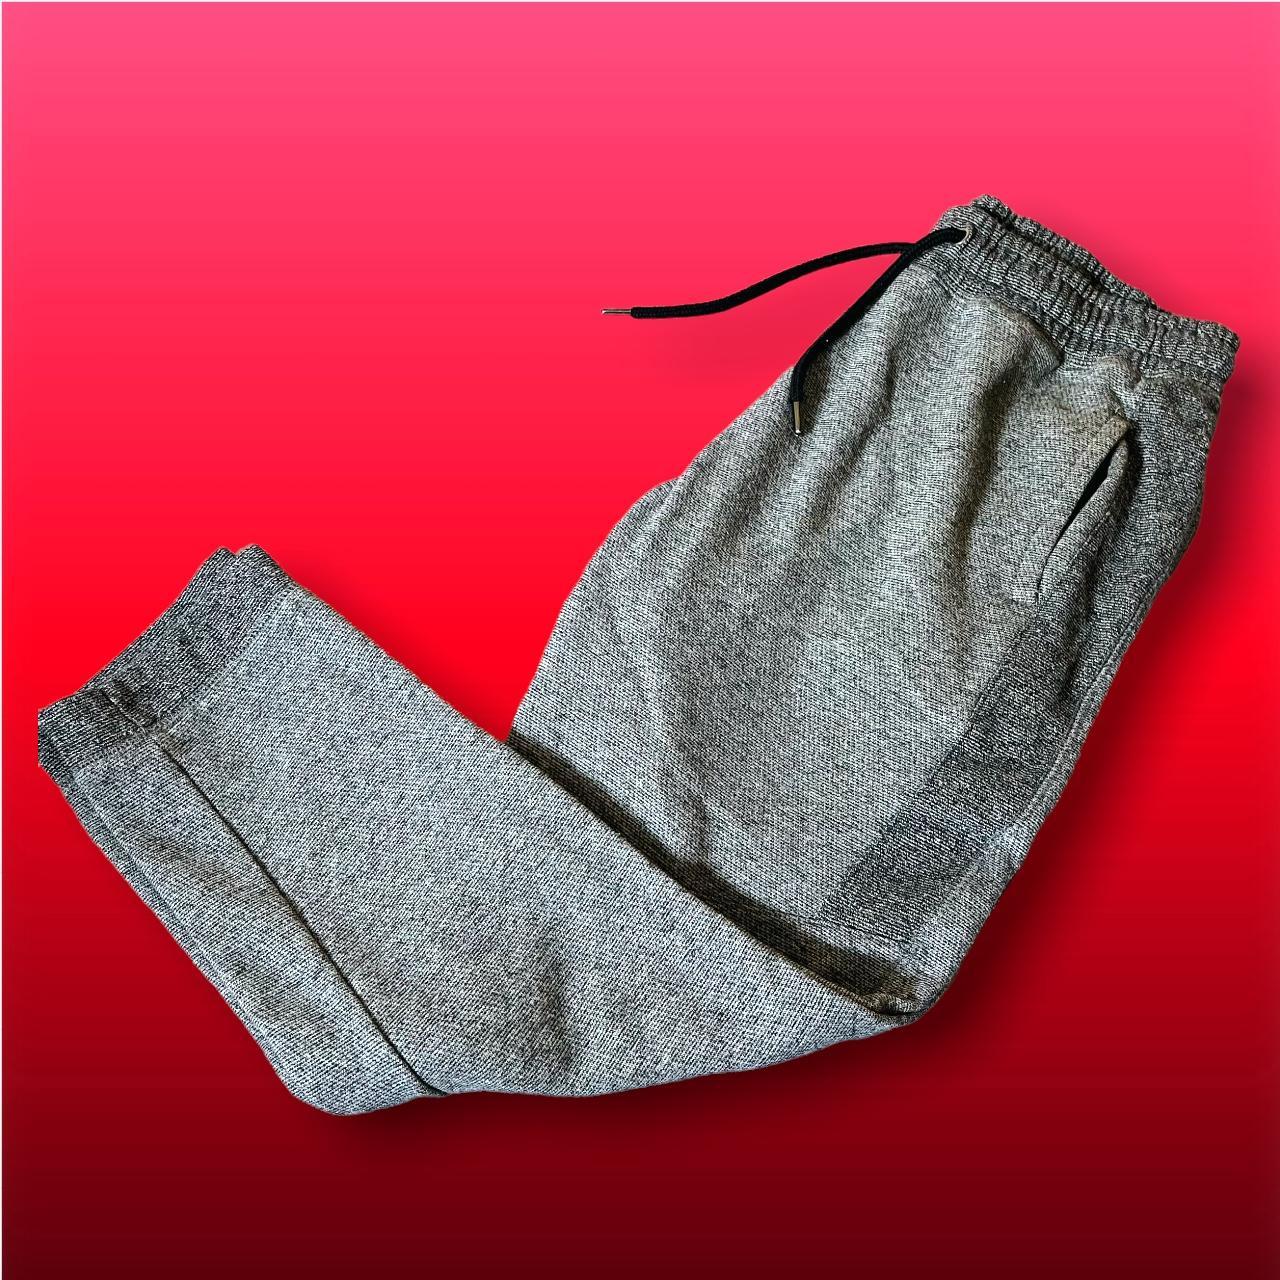 Product Image 1 - Marled Gray Sweatpants Sz L
Topman
Drawstring